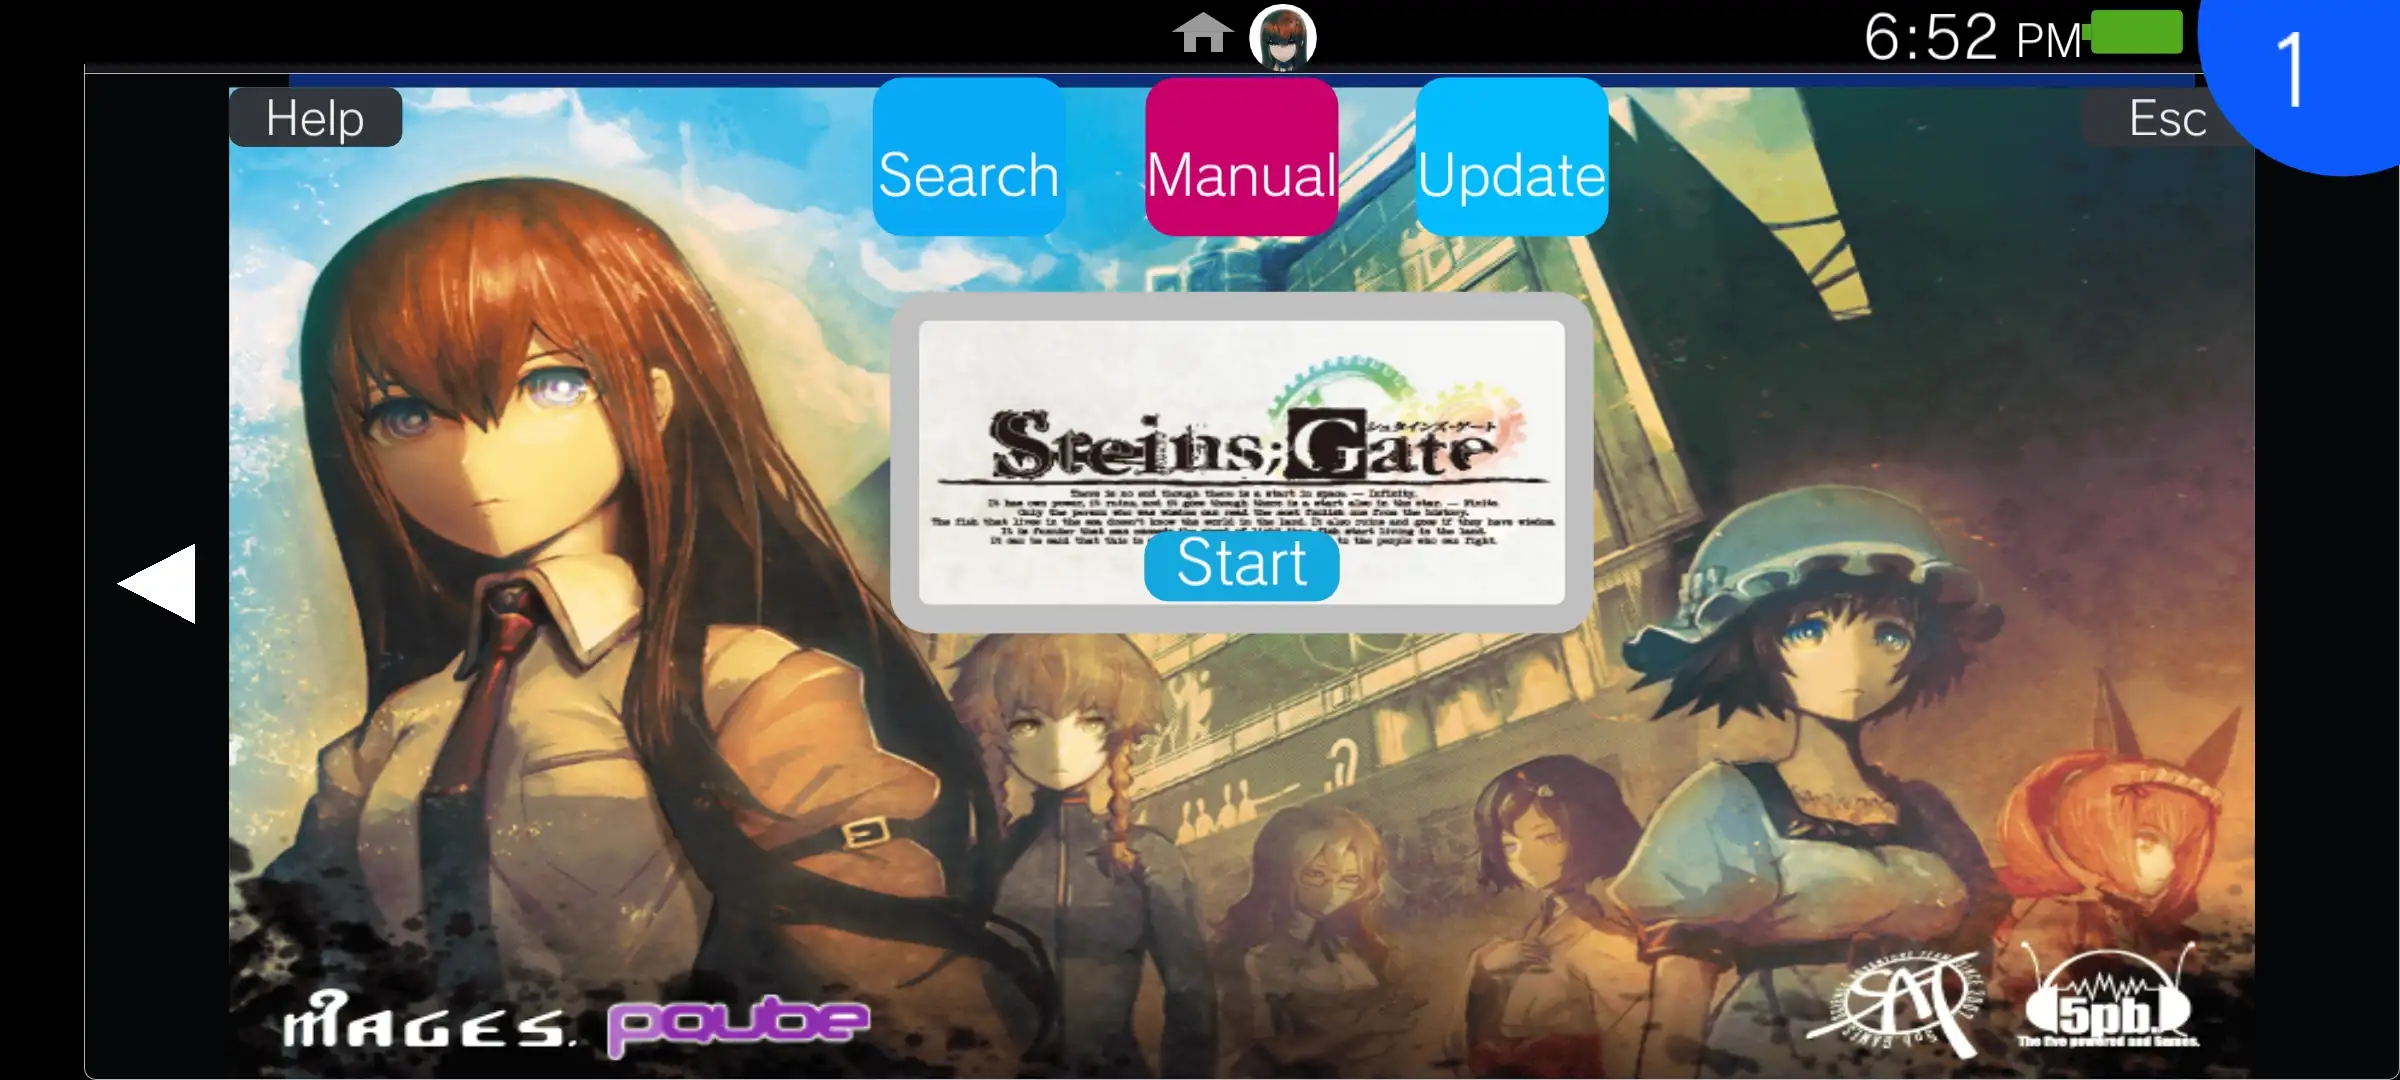 Steins Gate Vita3k Download Free Android Emulator - PsVita Emulator Android